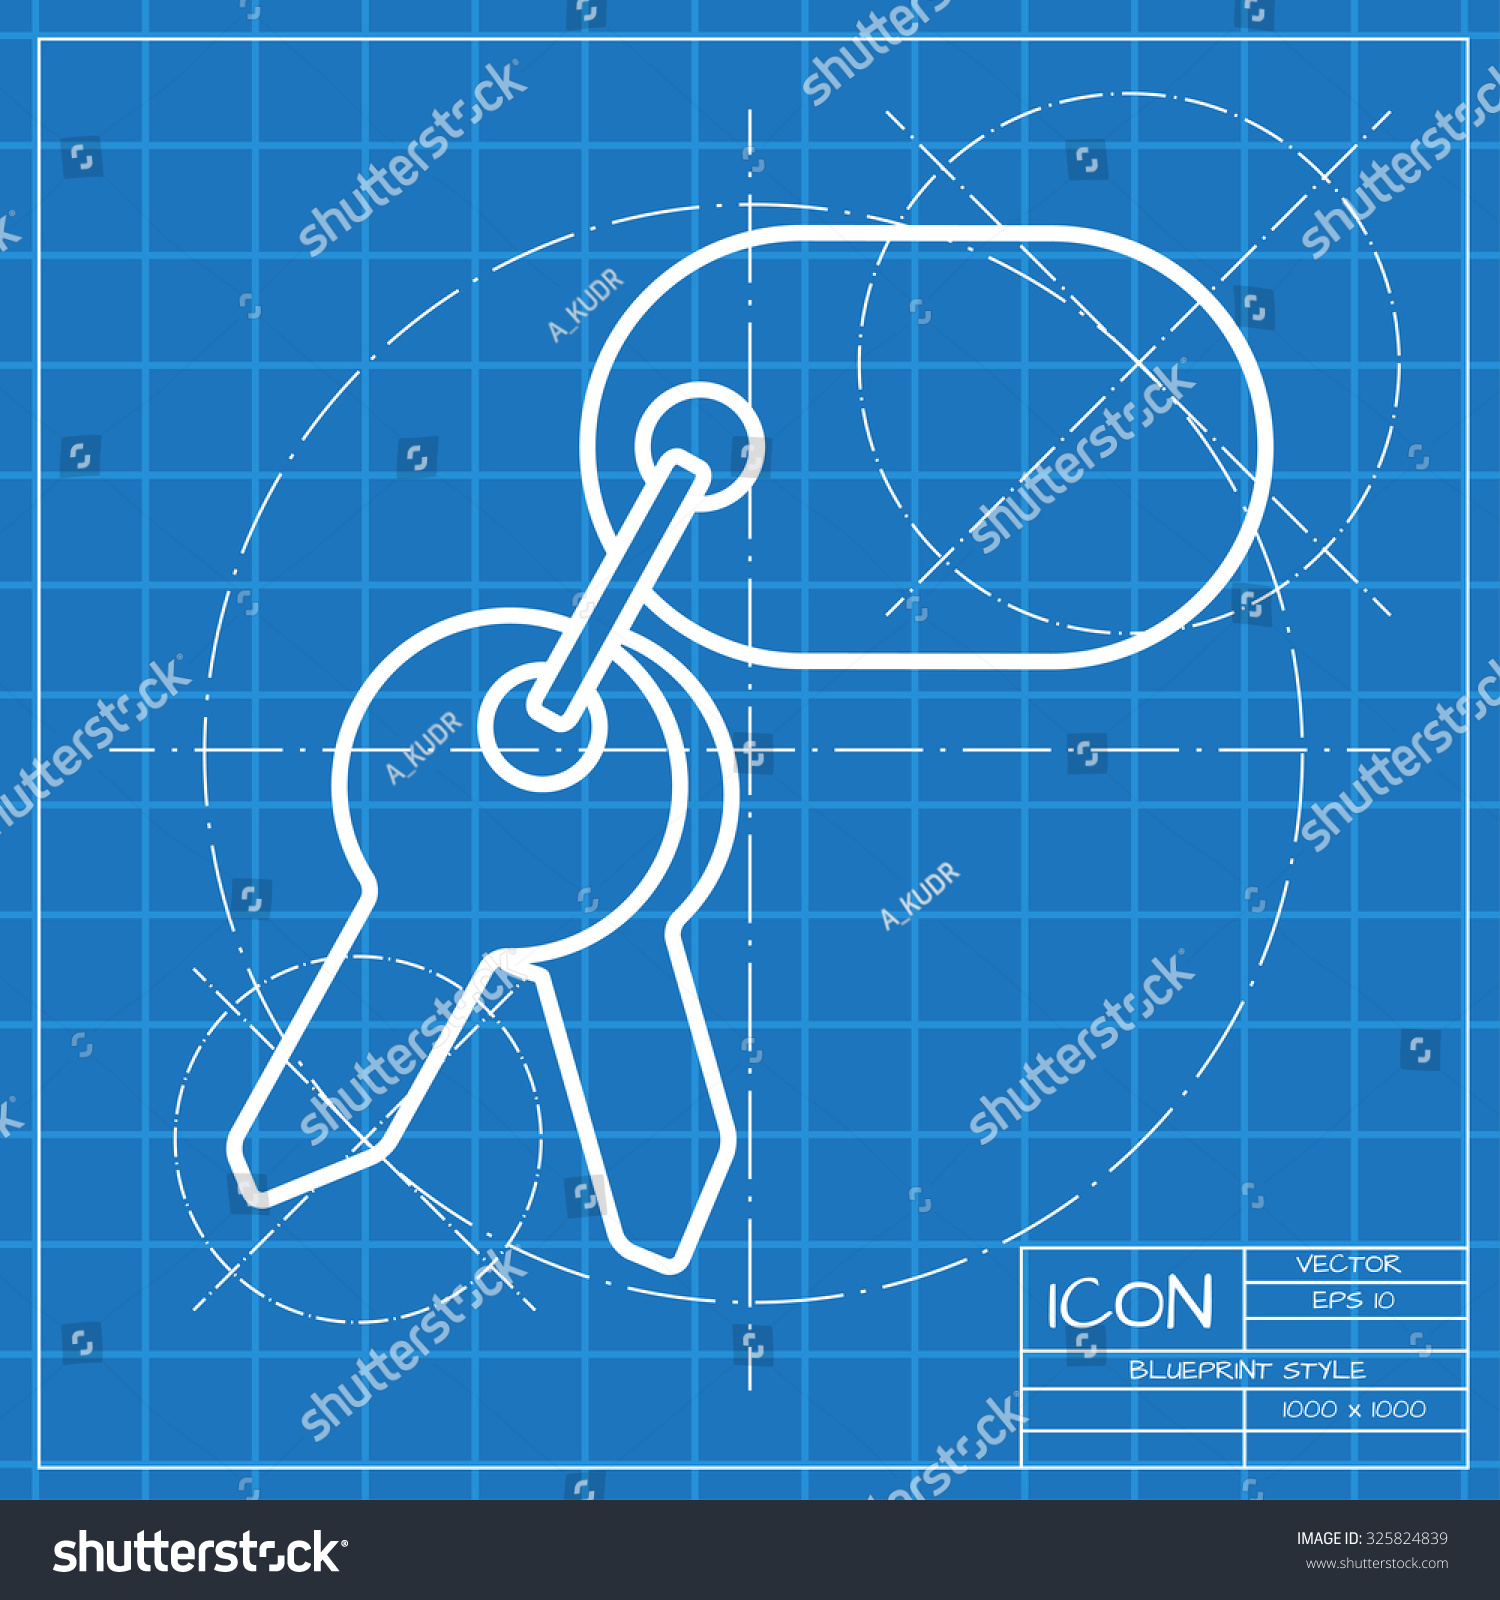 Vector Classic Blueprint Keys Icon On Stock Vector 325824839 ...